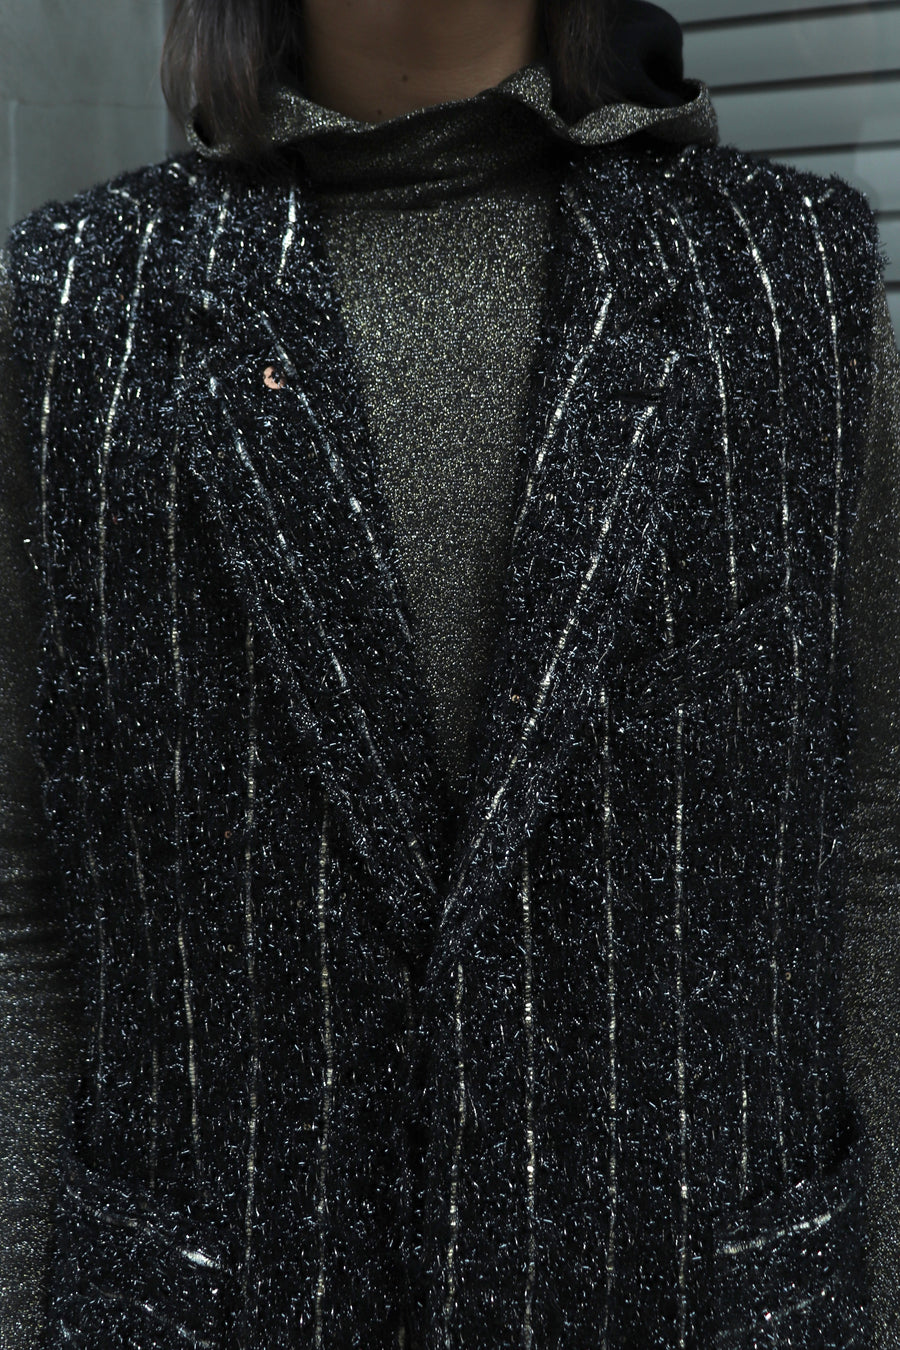 BED j.w. FORD  Glitter Stripe Vest(BLACK)